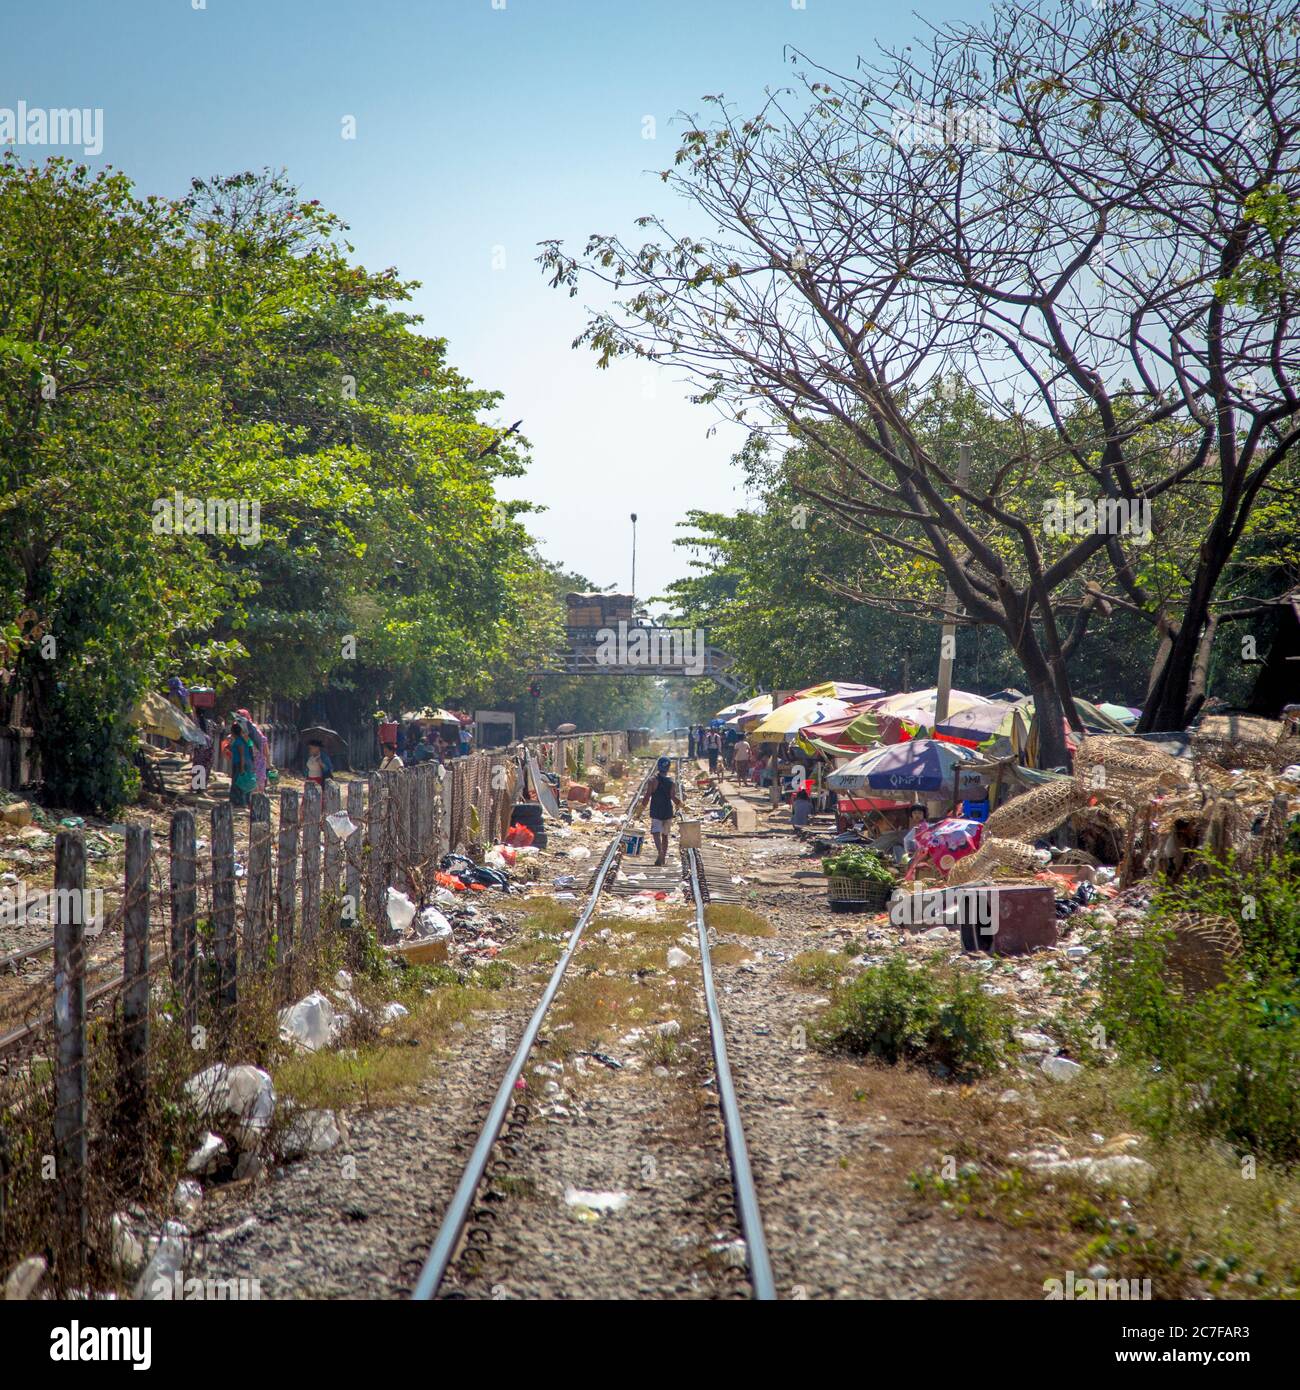 A person walking along the train tracks of the Yangon Circular railway in Myanmar Stock Photo